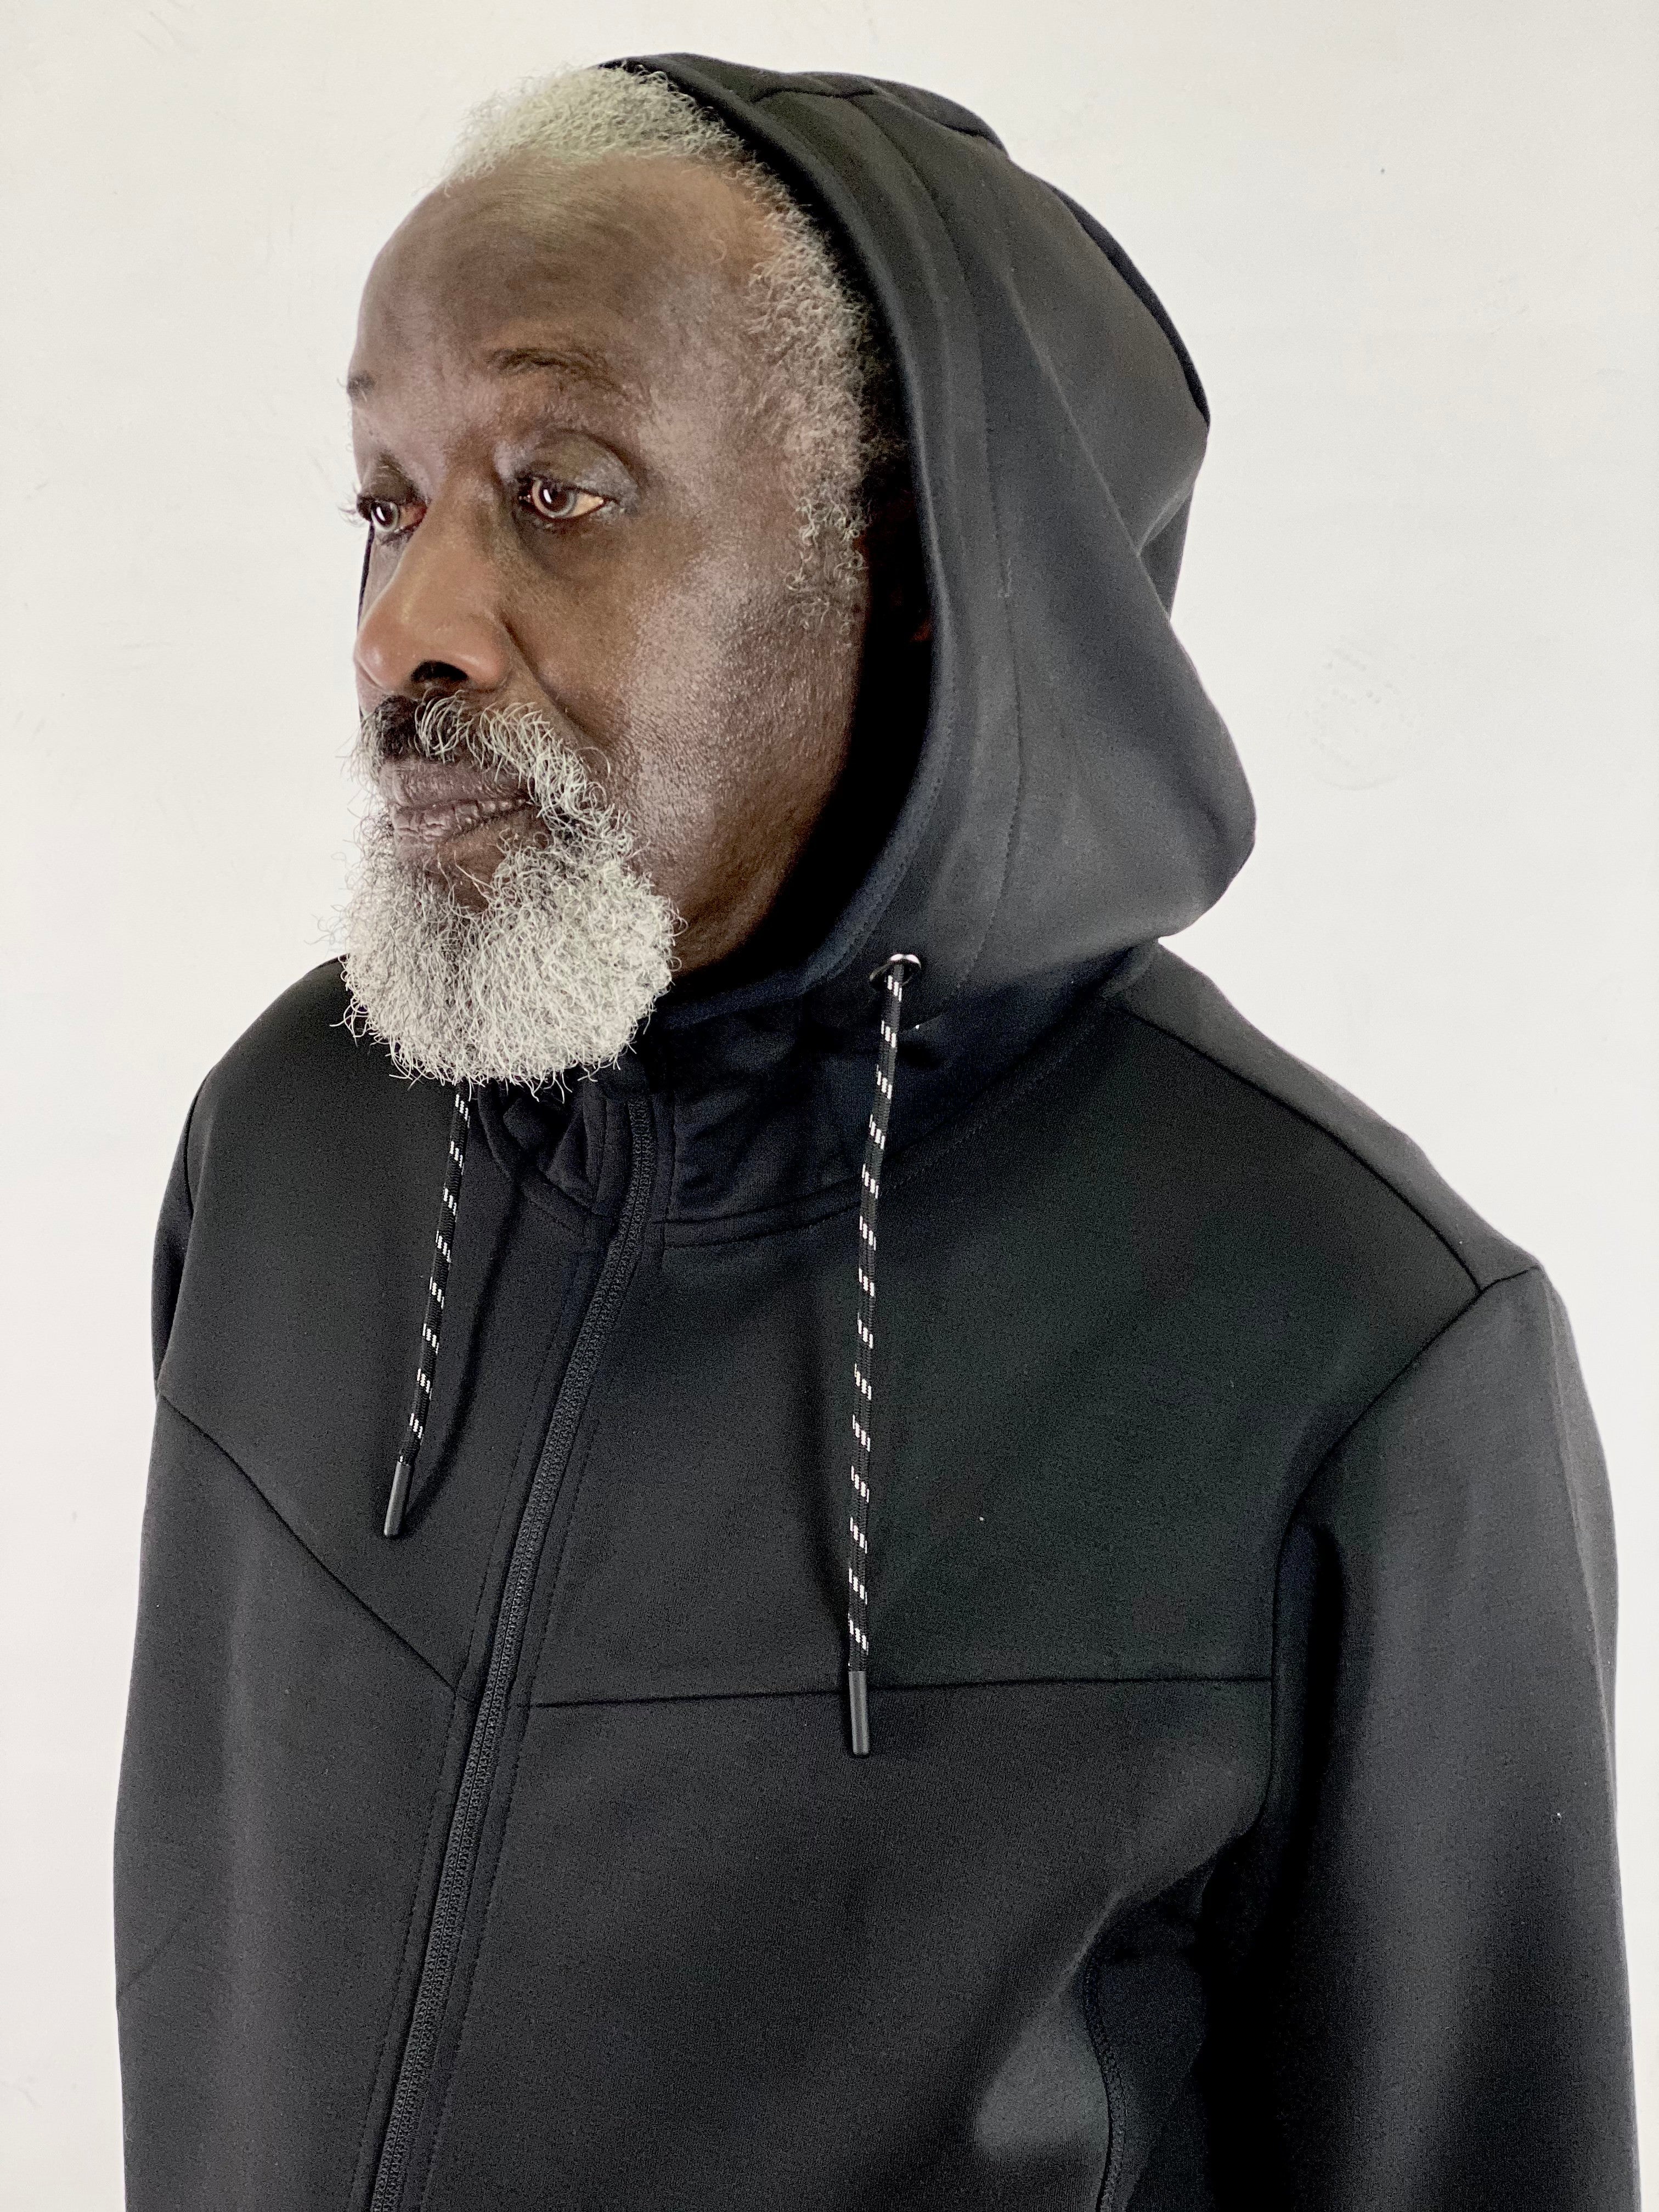 MAISON NOIR Sleeve Print Recycled Hood Jacket Black